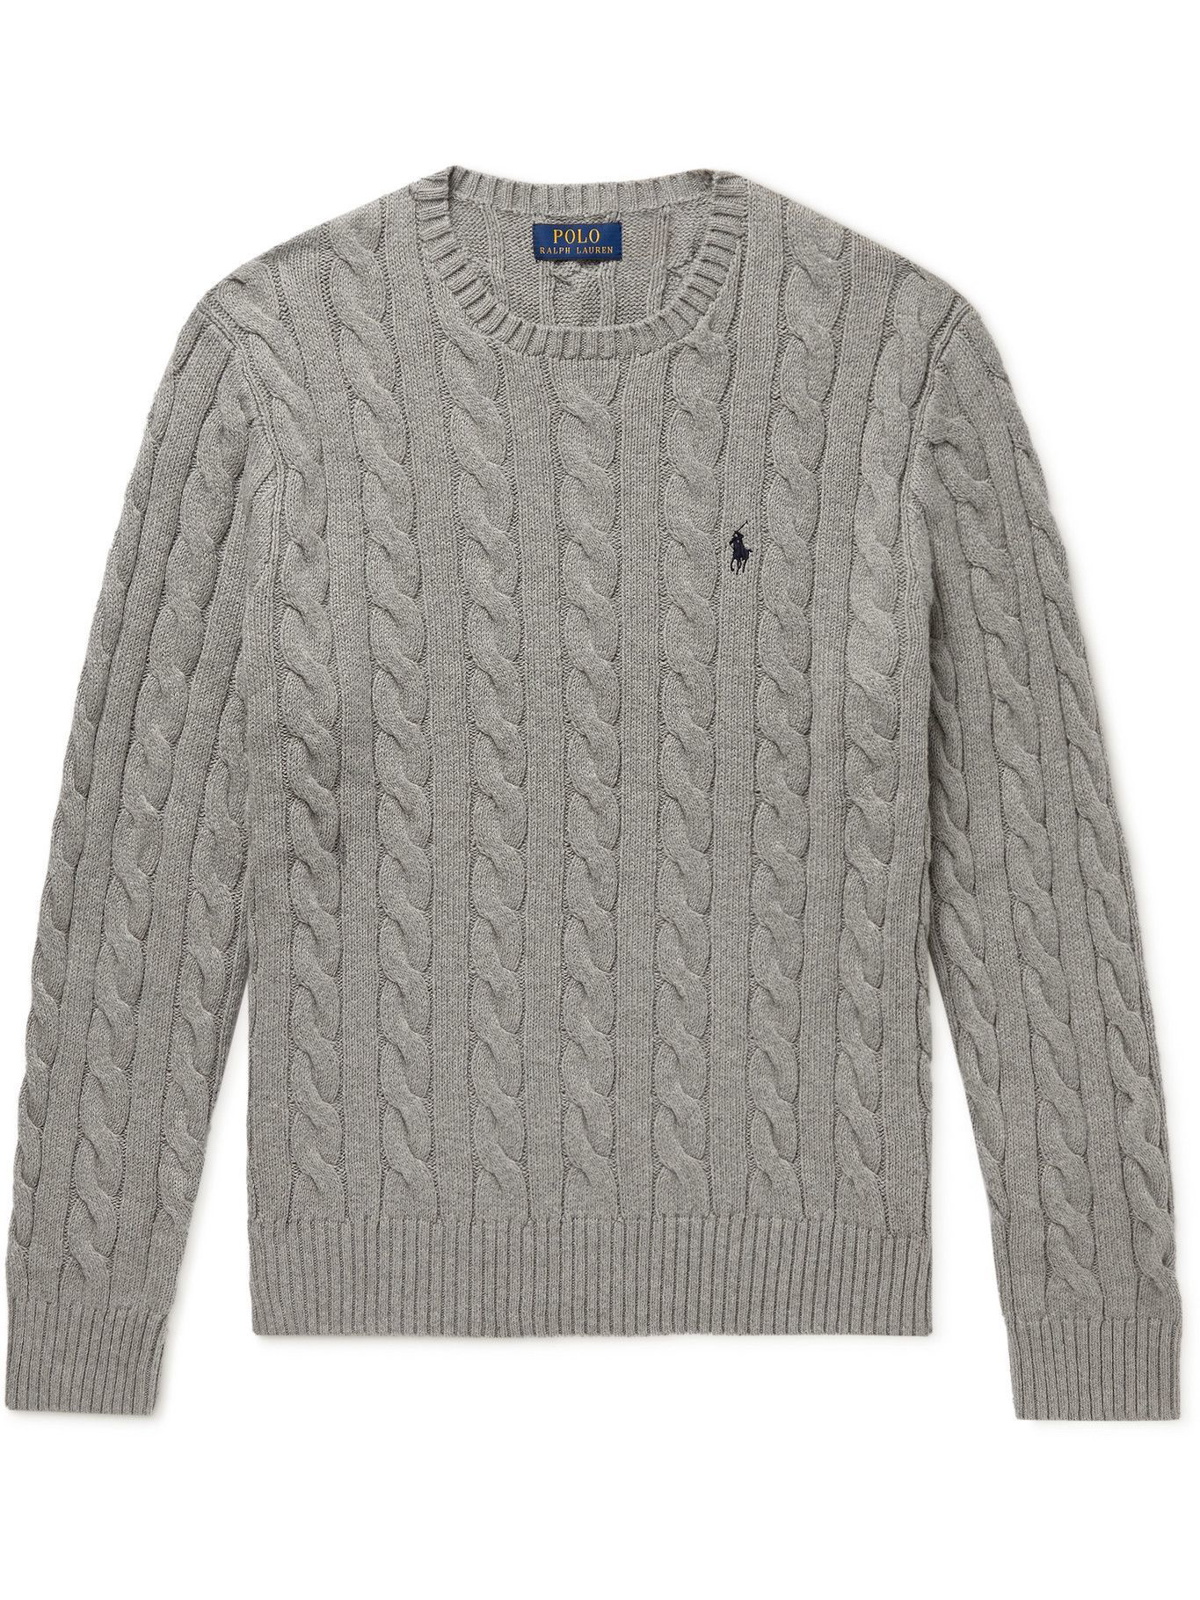 POLO RALPH LAUREN - Cable-Knit Cotton Sweater - Gray Polo Ralph Lauren